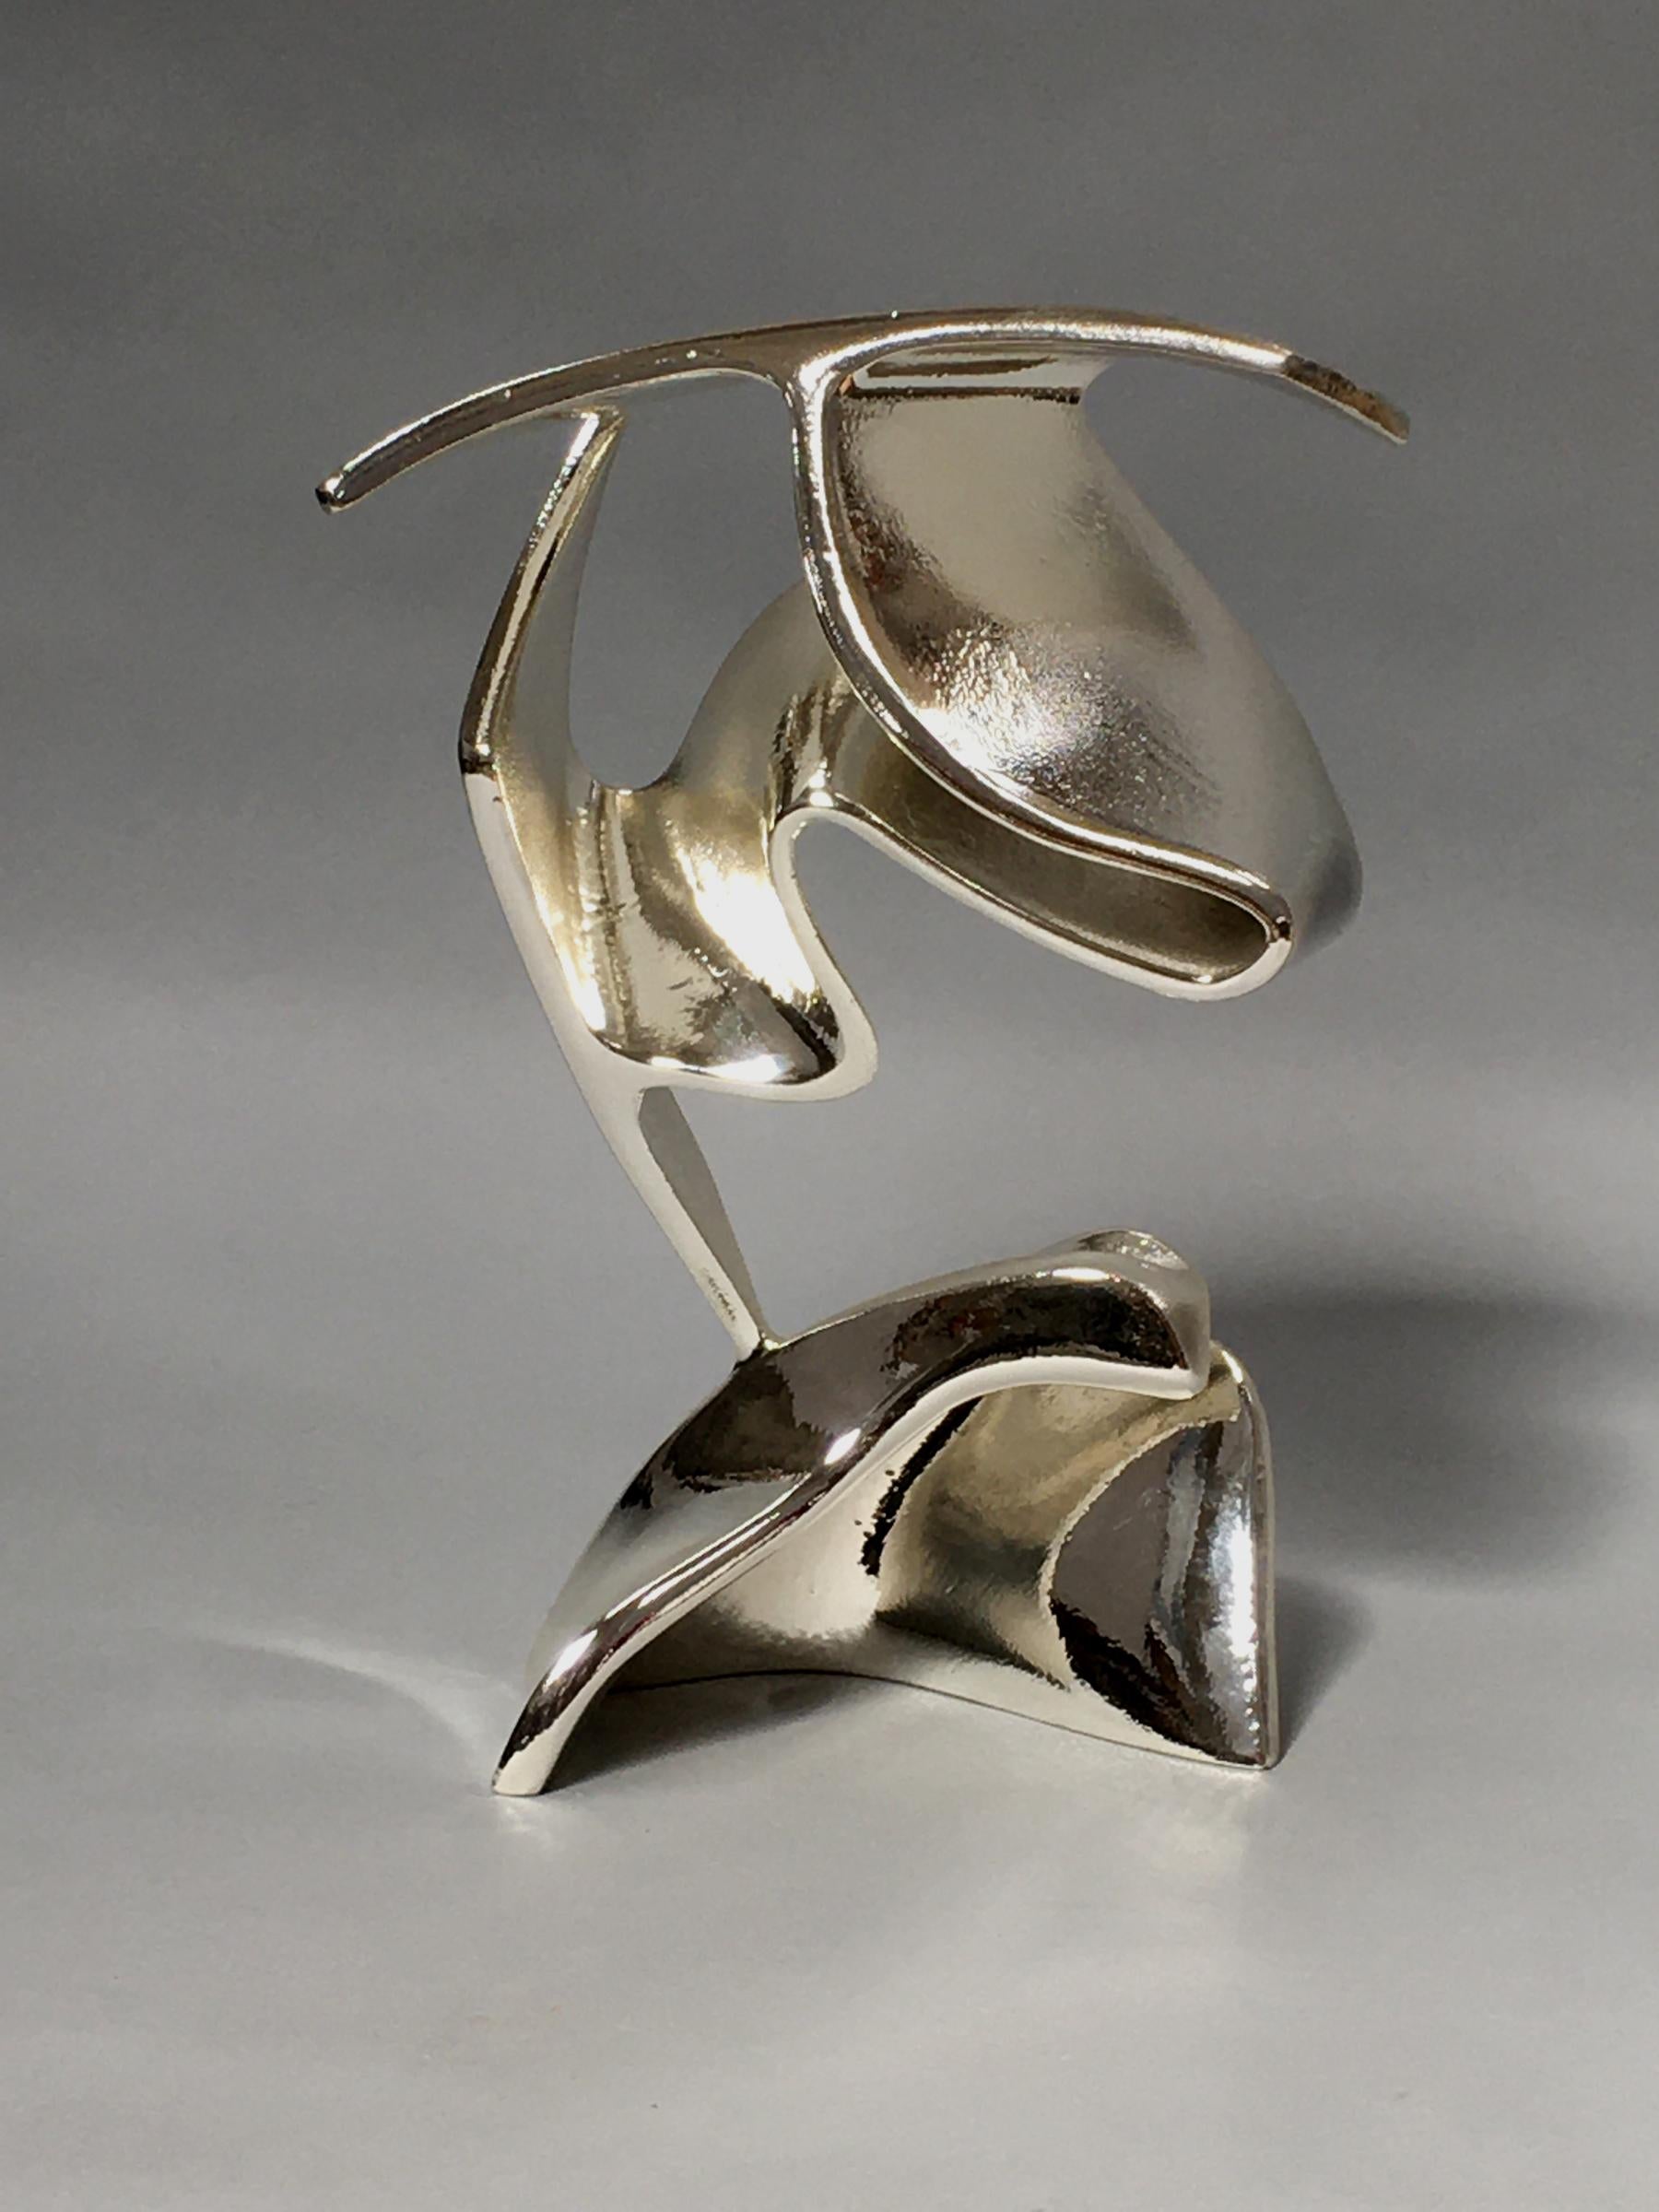 Silver Streak - Sculpture by Bret Price